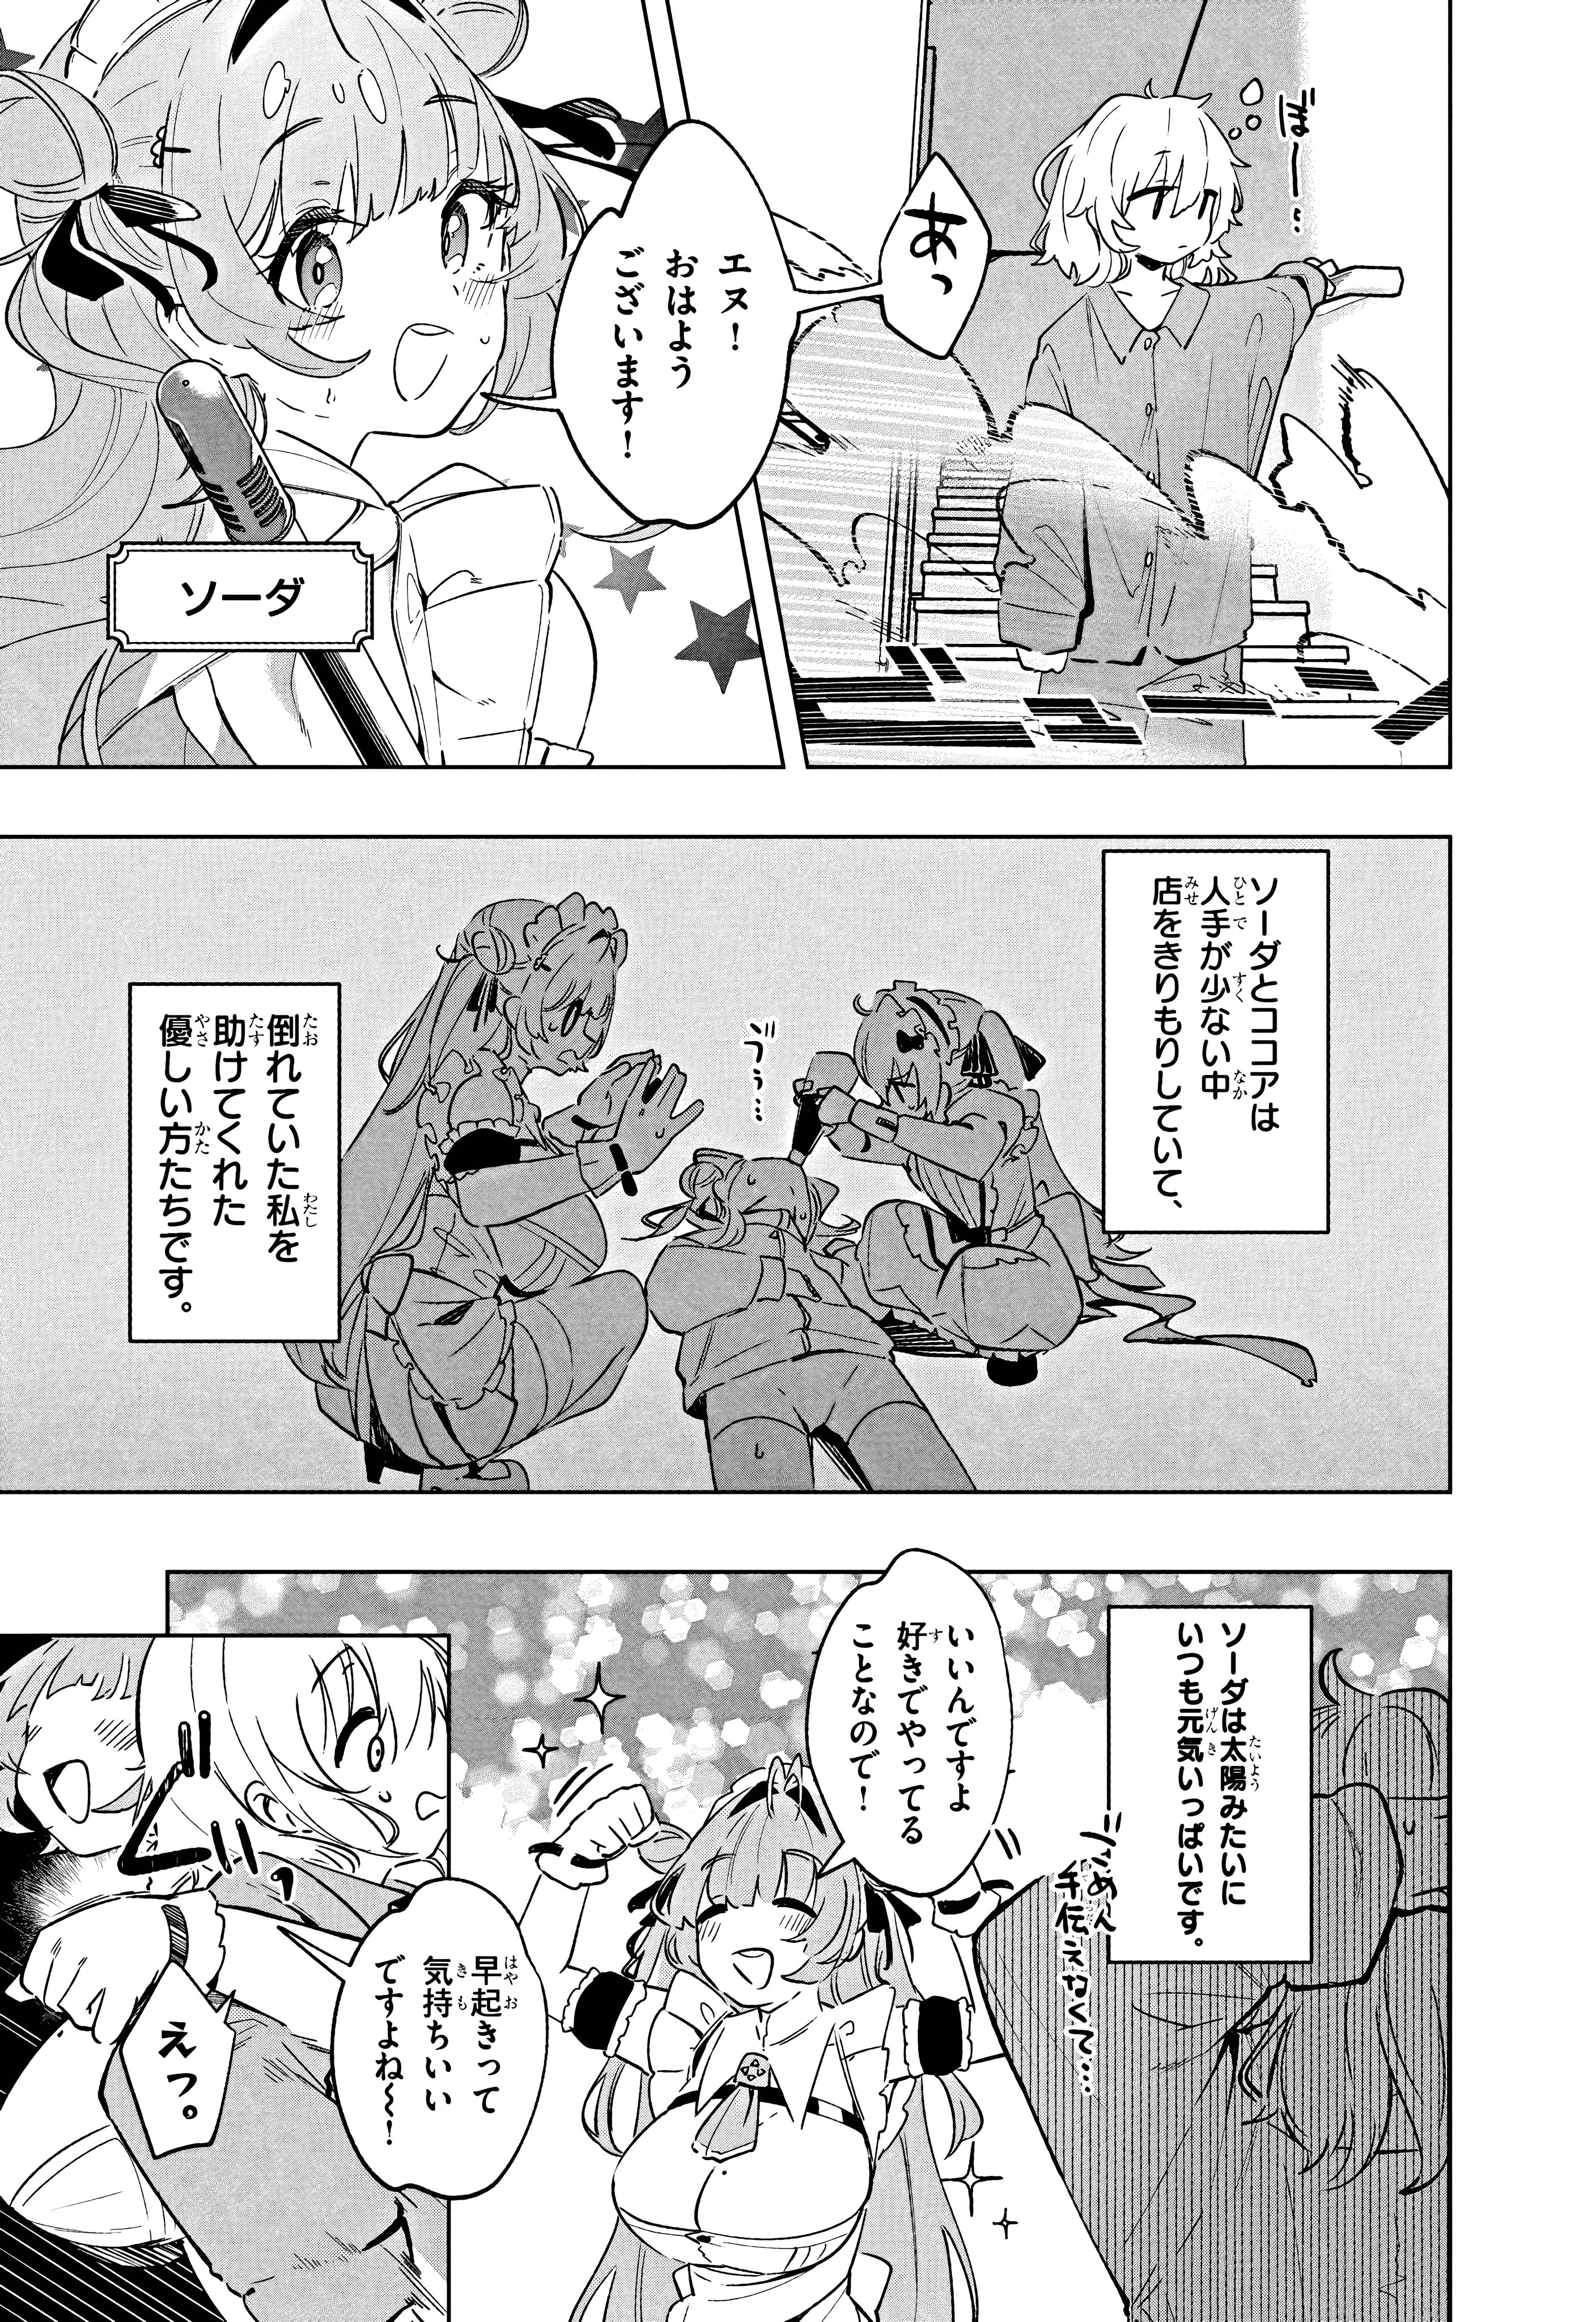 Shouri no Megami: Nikke – Sweet Encounter - Chapter 2 - Page 3